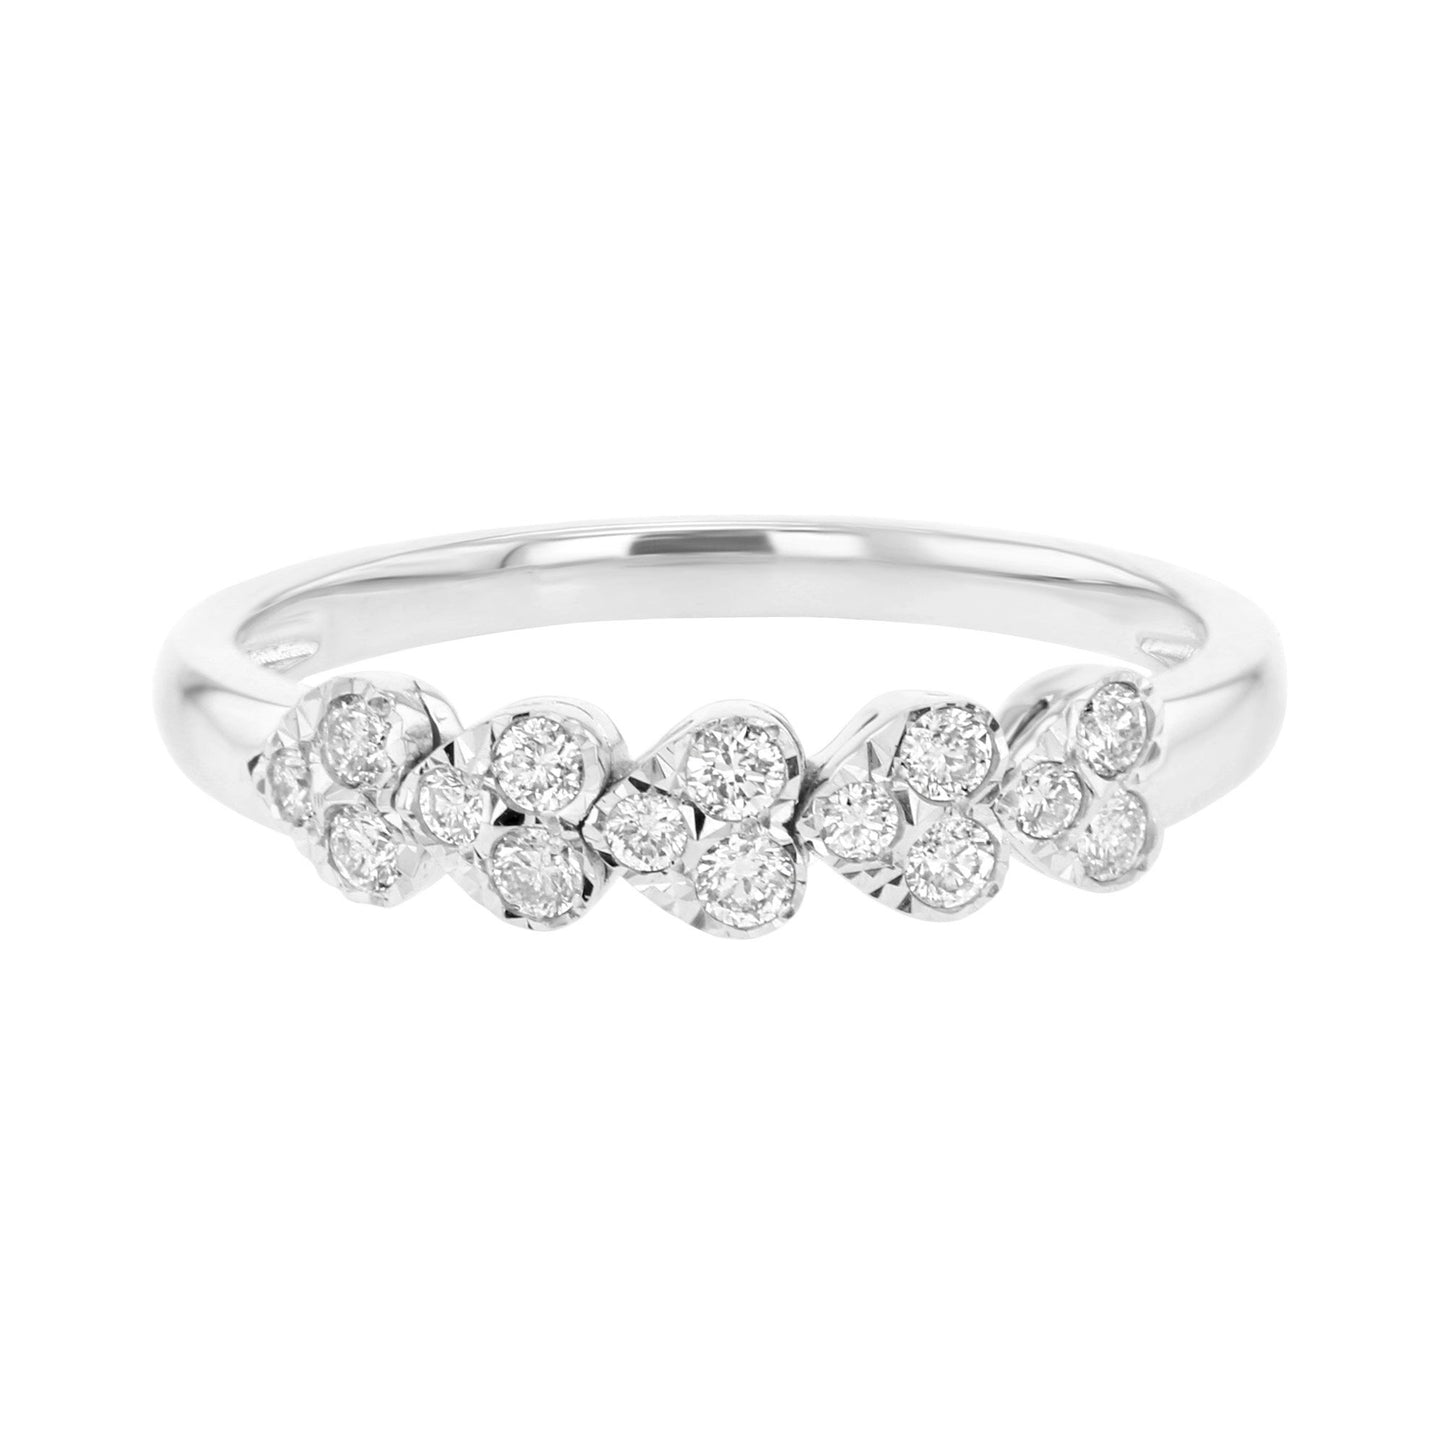 Dallas Mirage Heart Diamond Ring